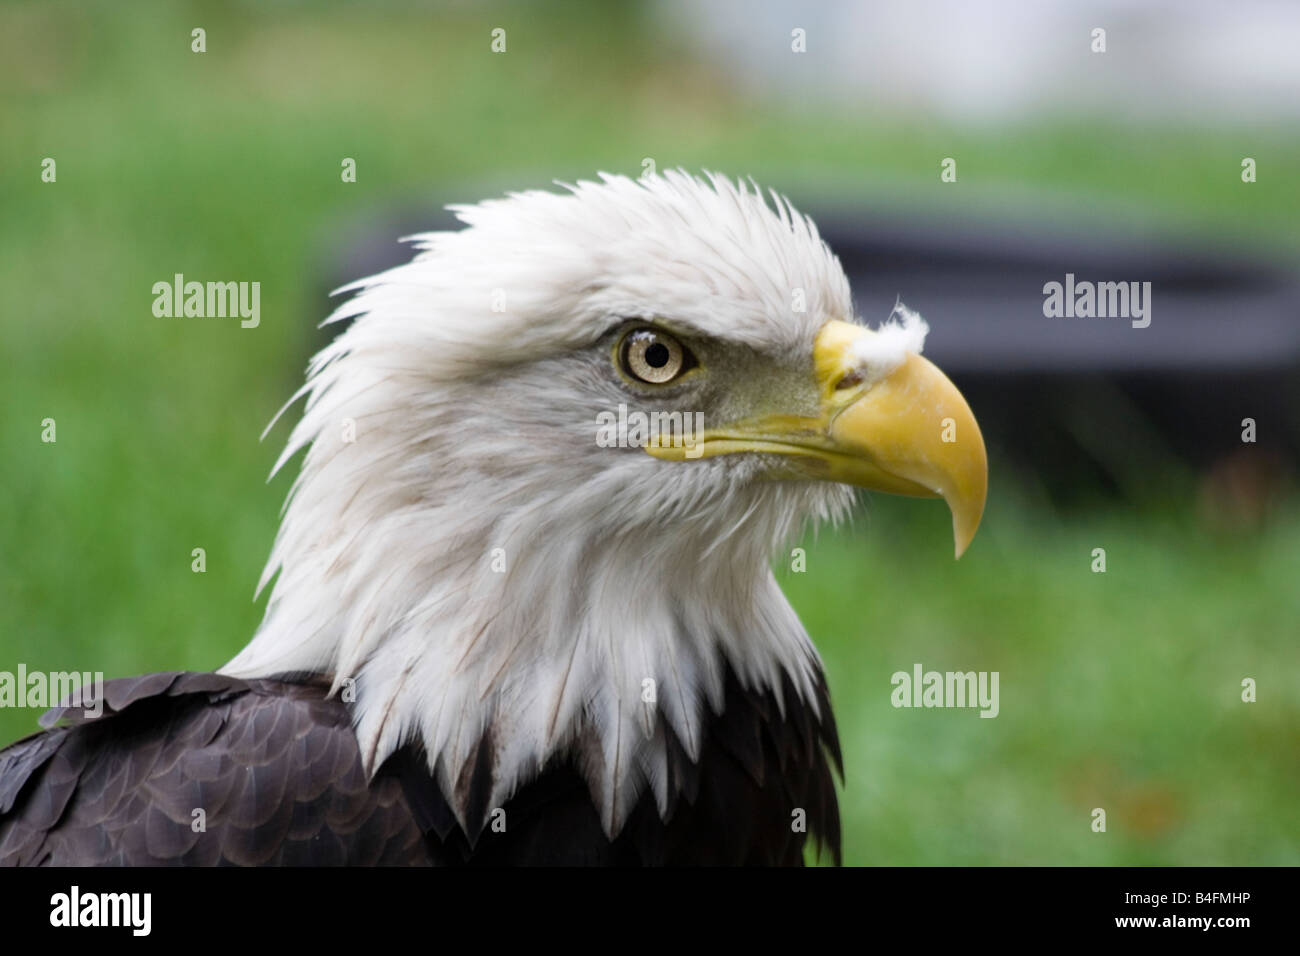 The Bald Eagle (Haliaeetus leucocephalus). Stock Photo